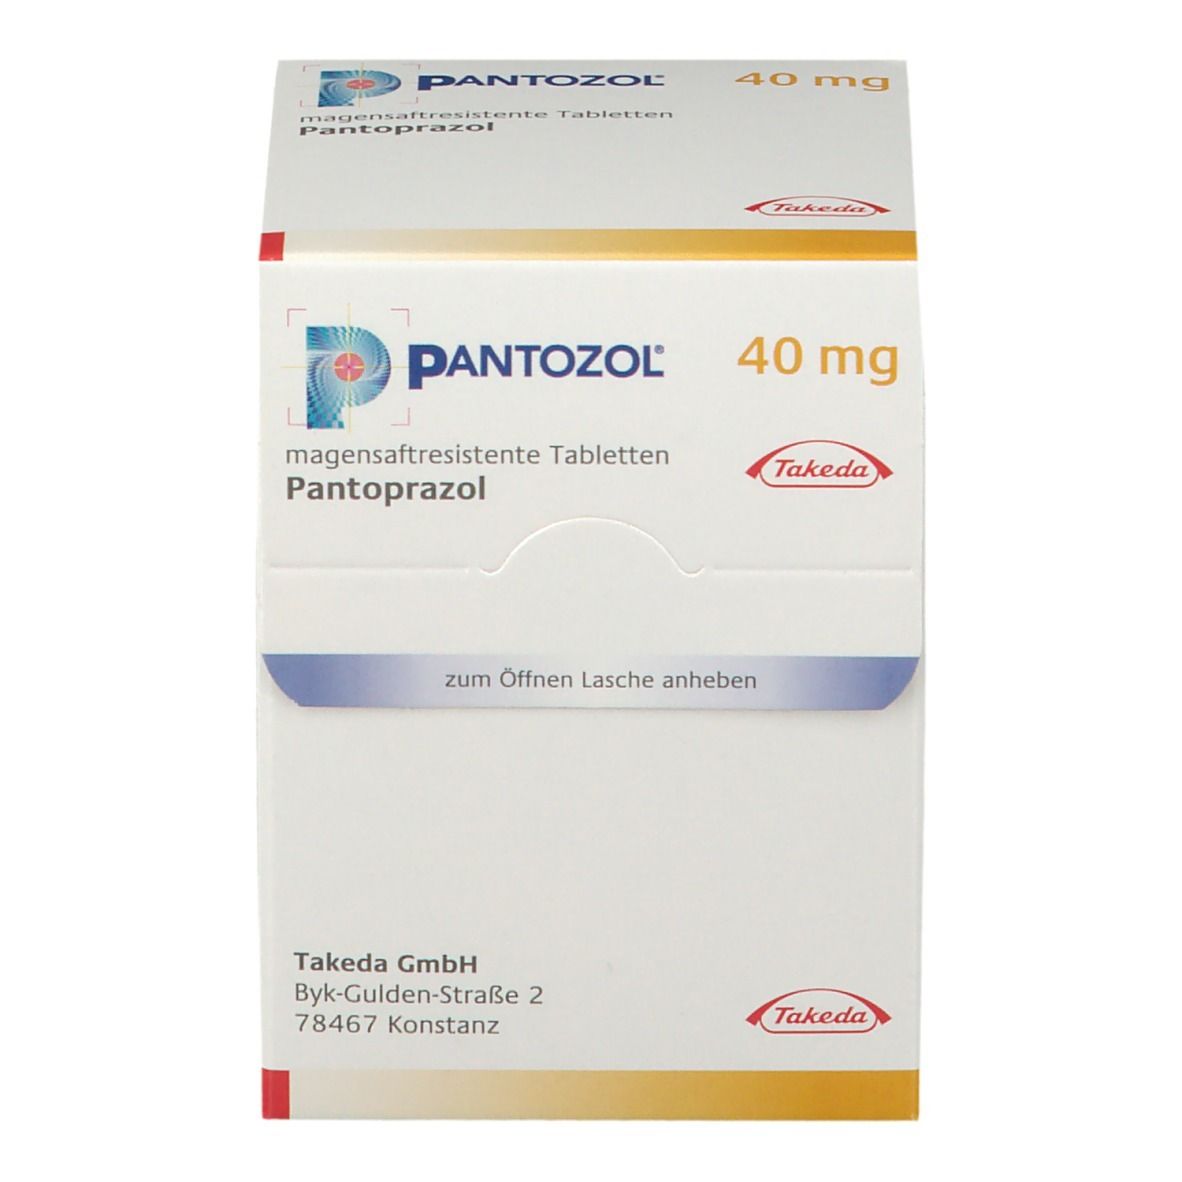 Pantozol® 40 mg